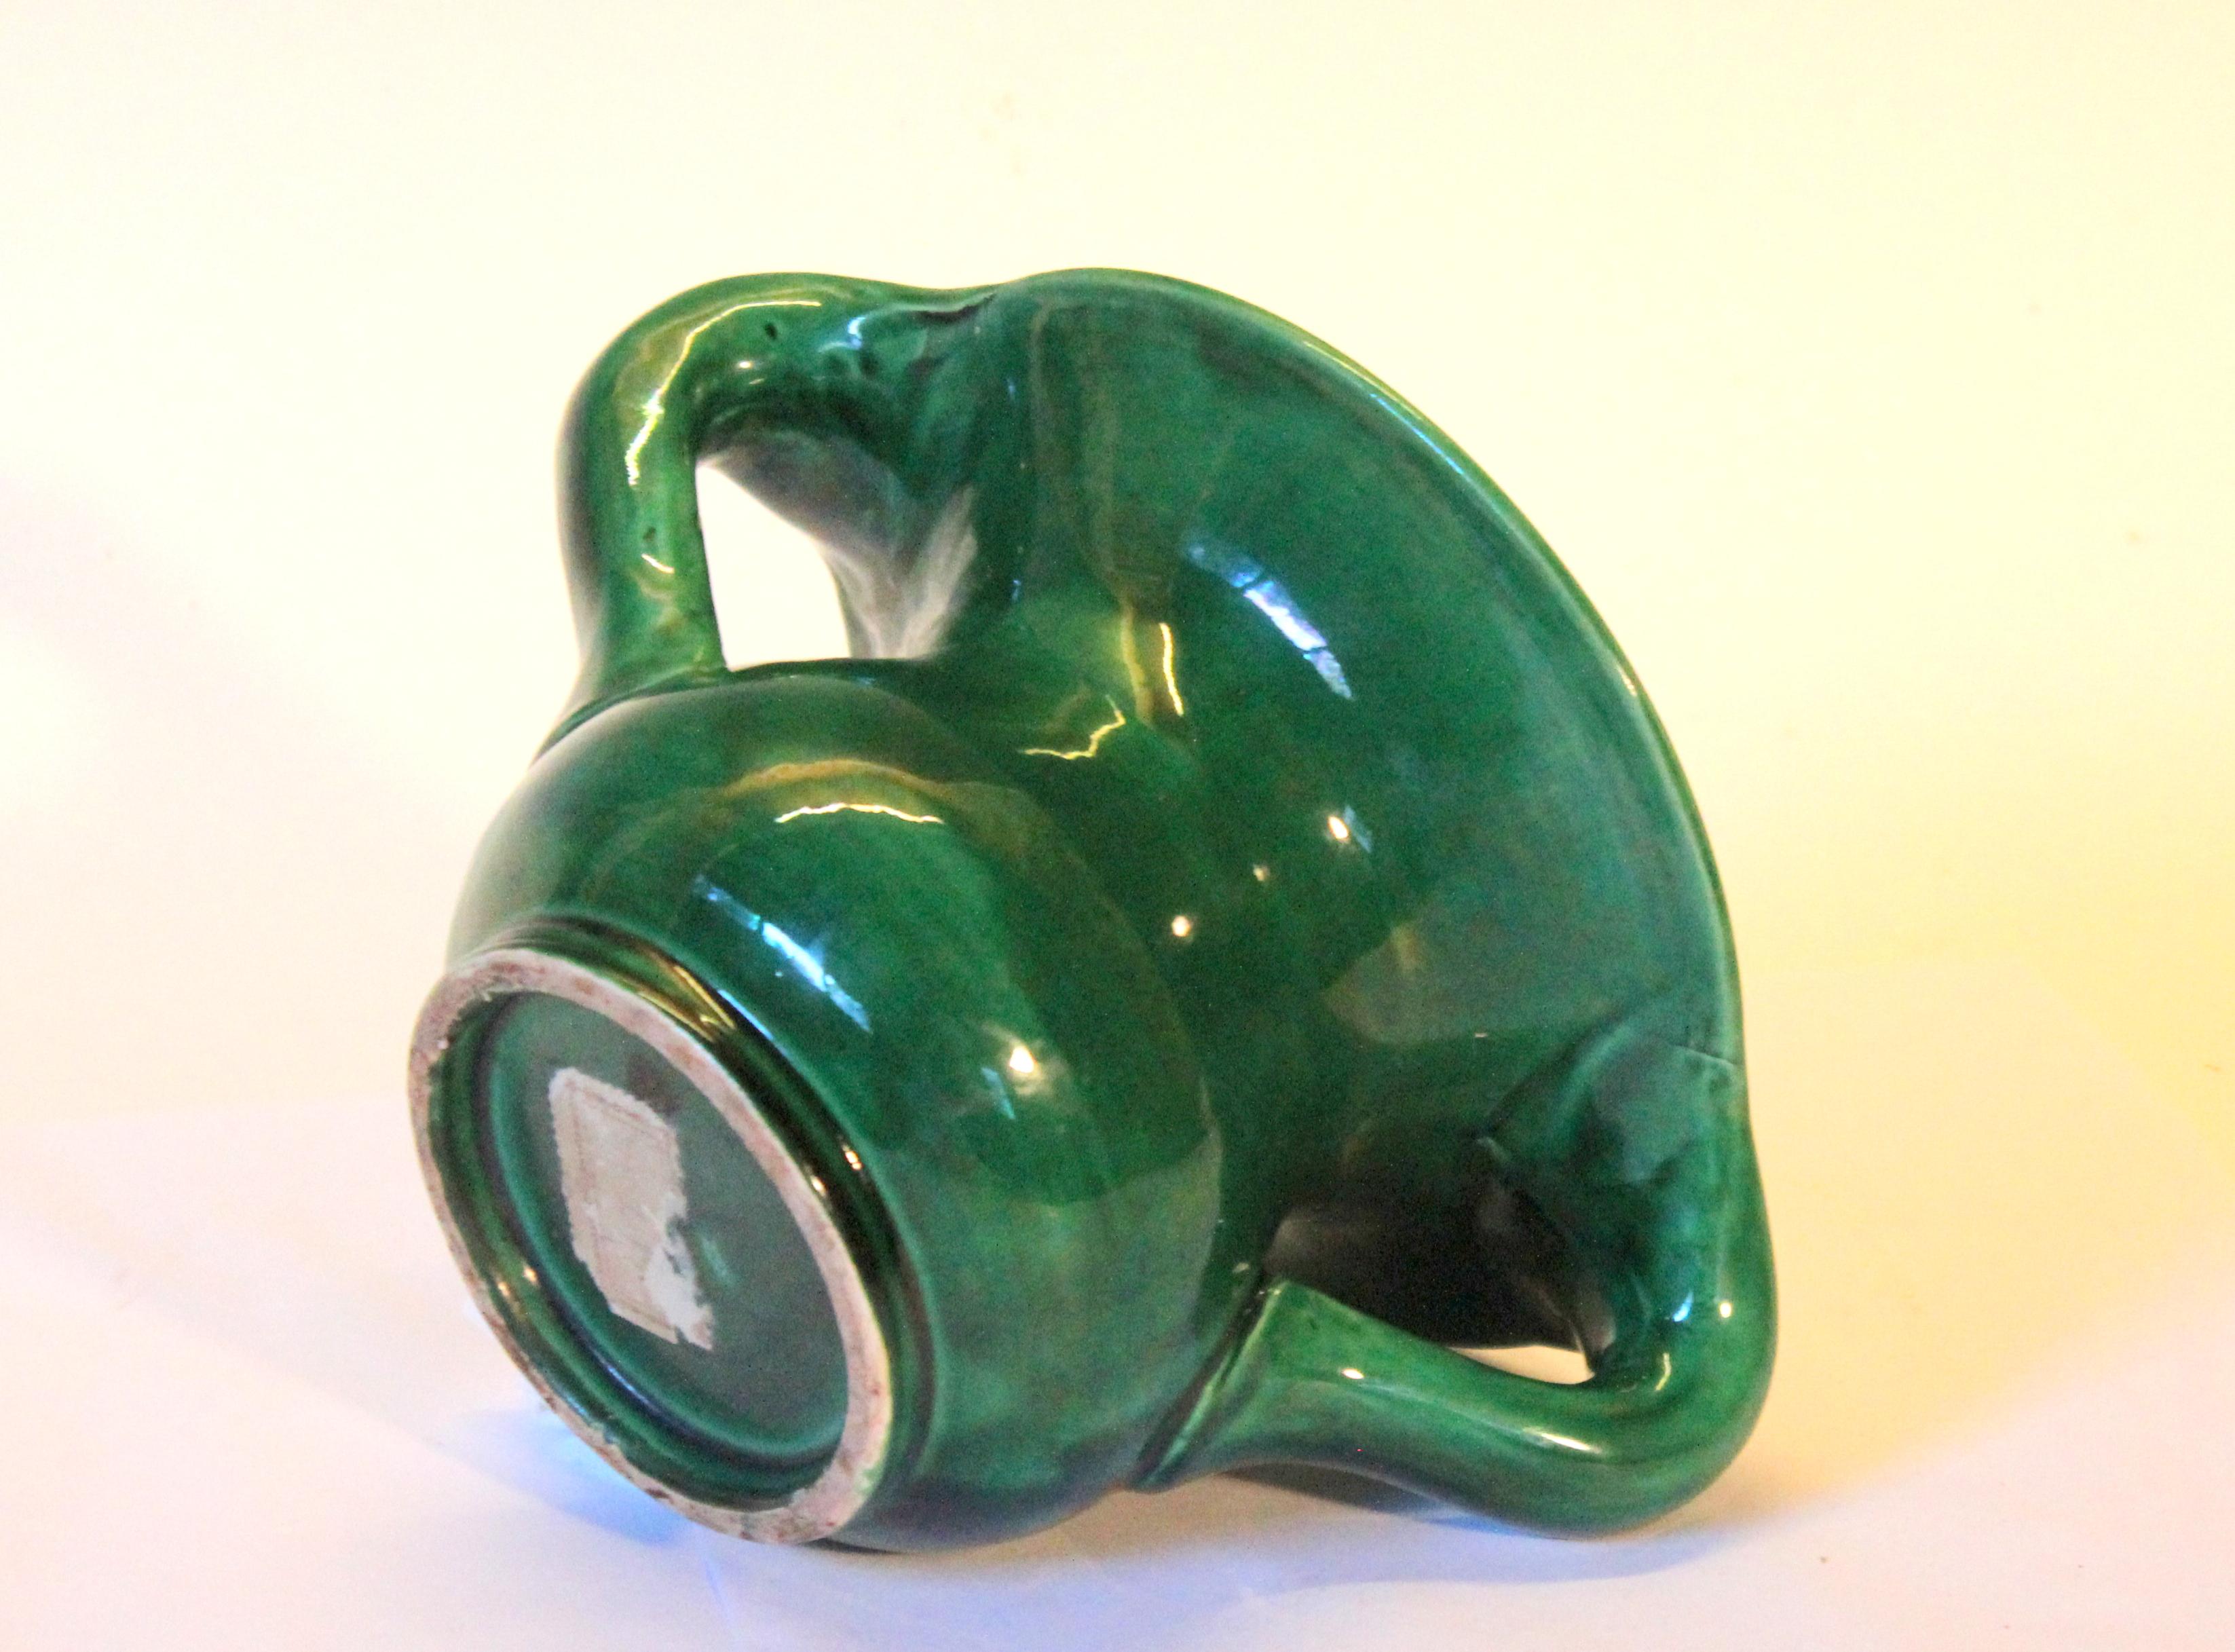 Awaji Pottery Organic Art Nouveau Curvy Monochrome Green Vase 1